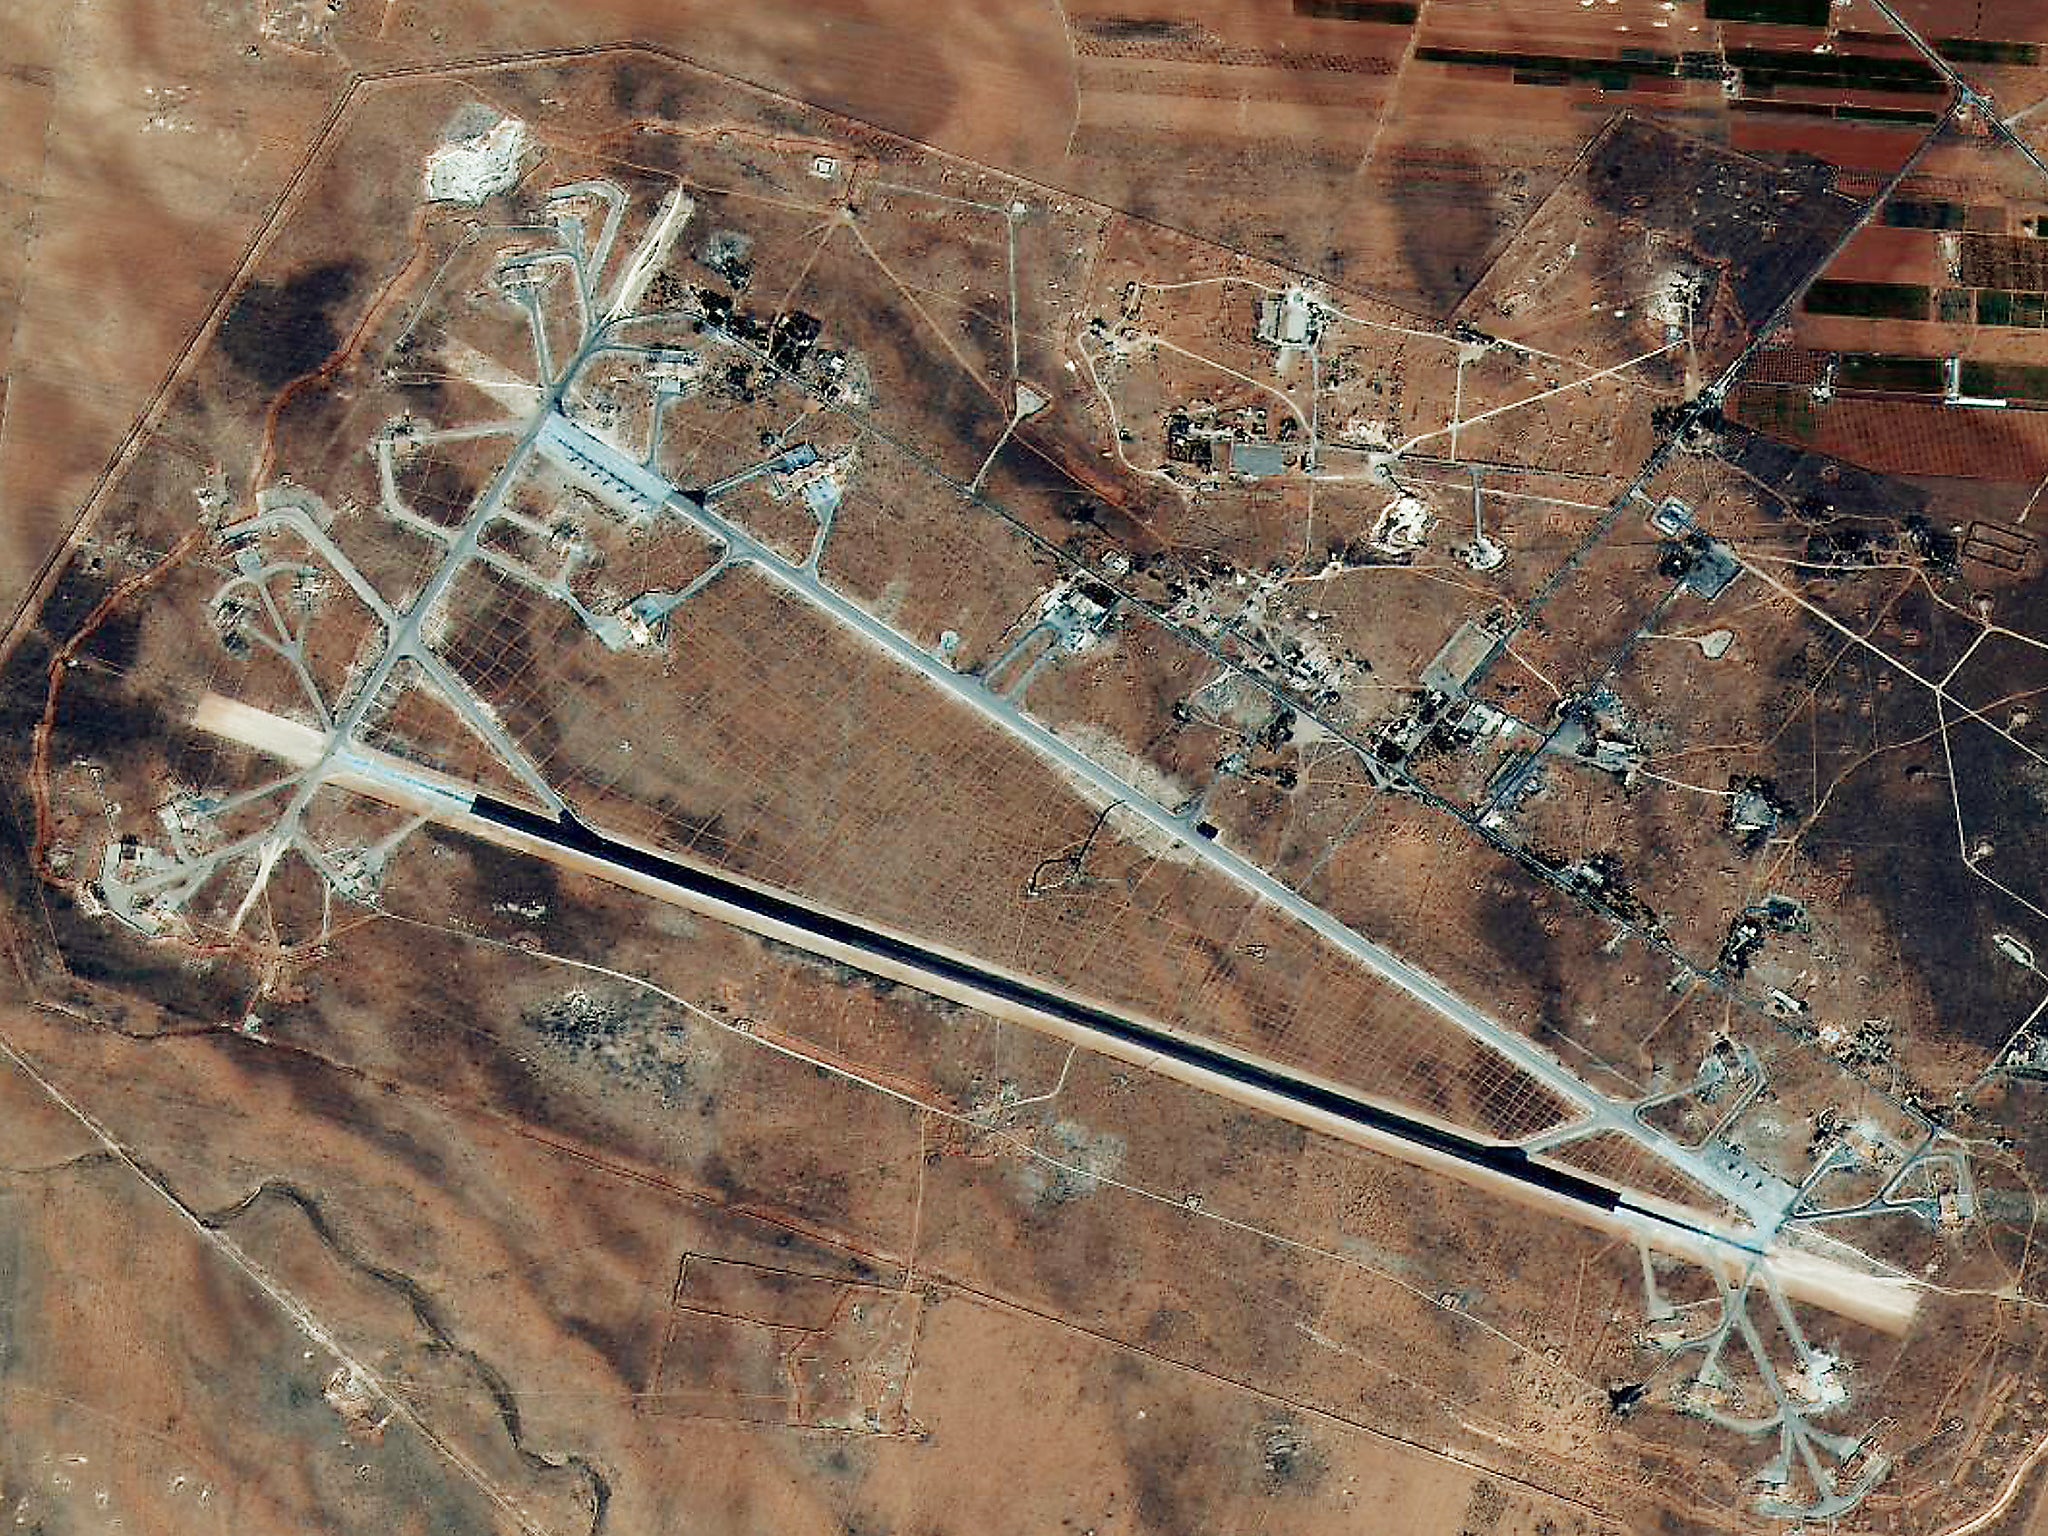 Shayrat airfield in Syria